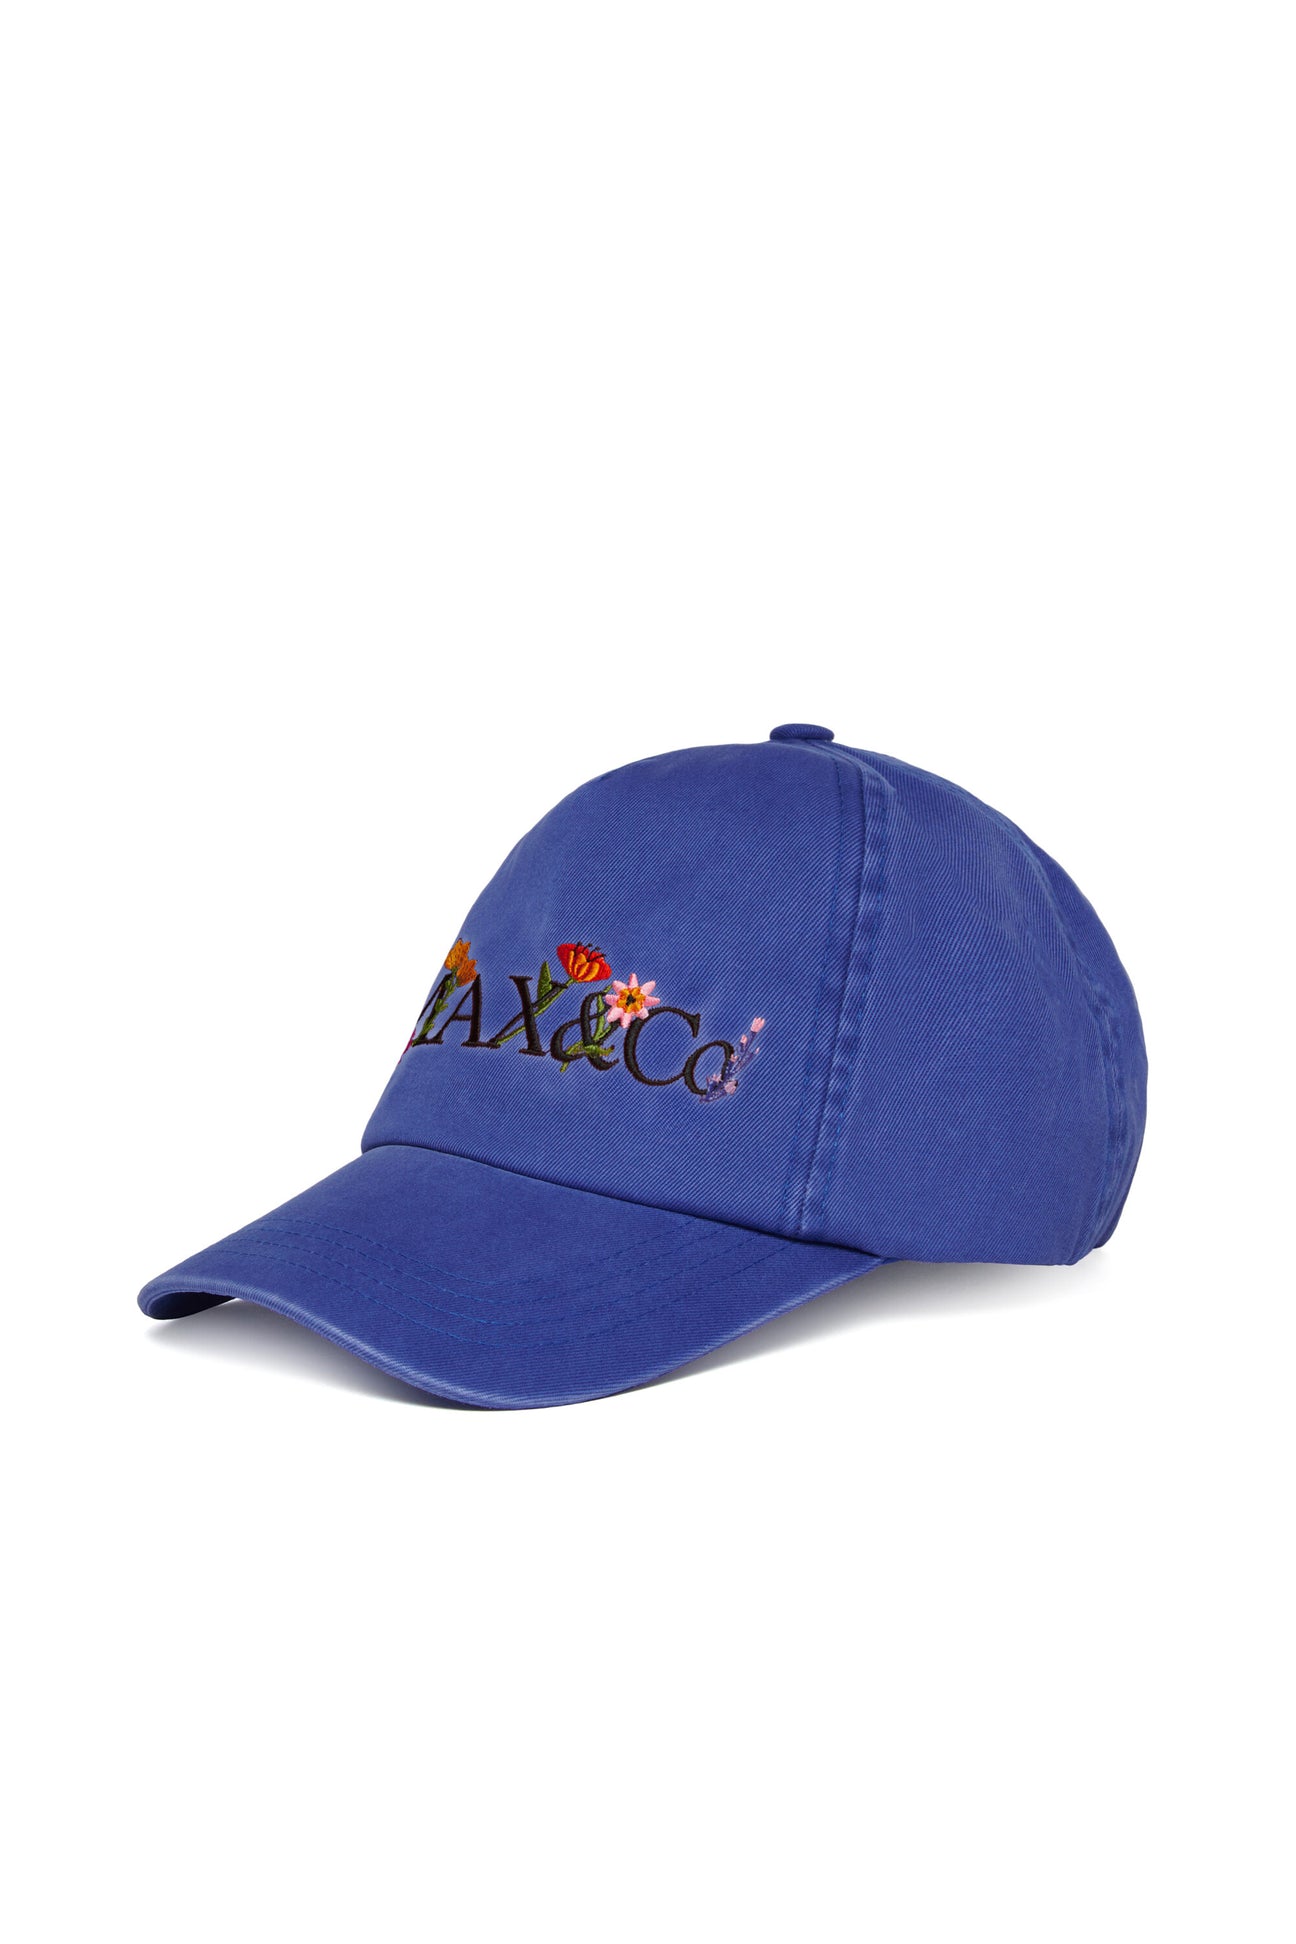 Baseball cap with floral logo Baseball cap with floral logo